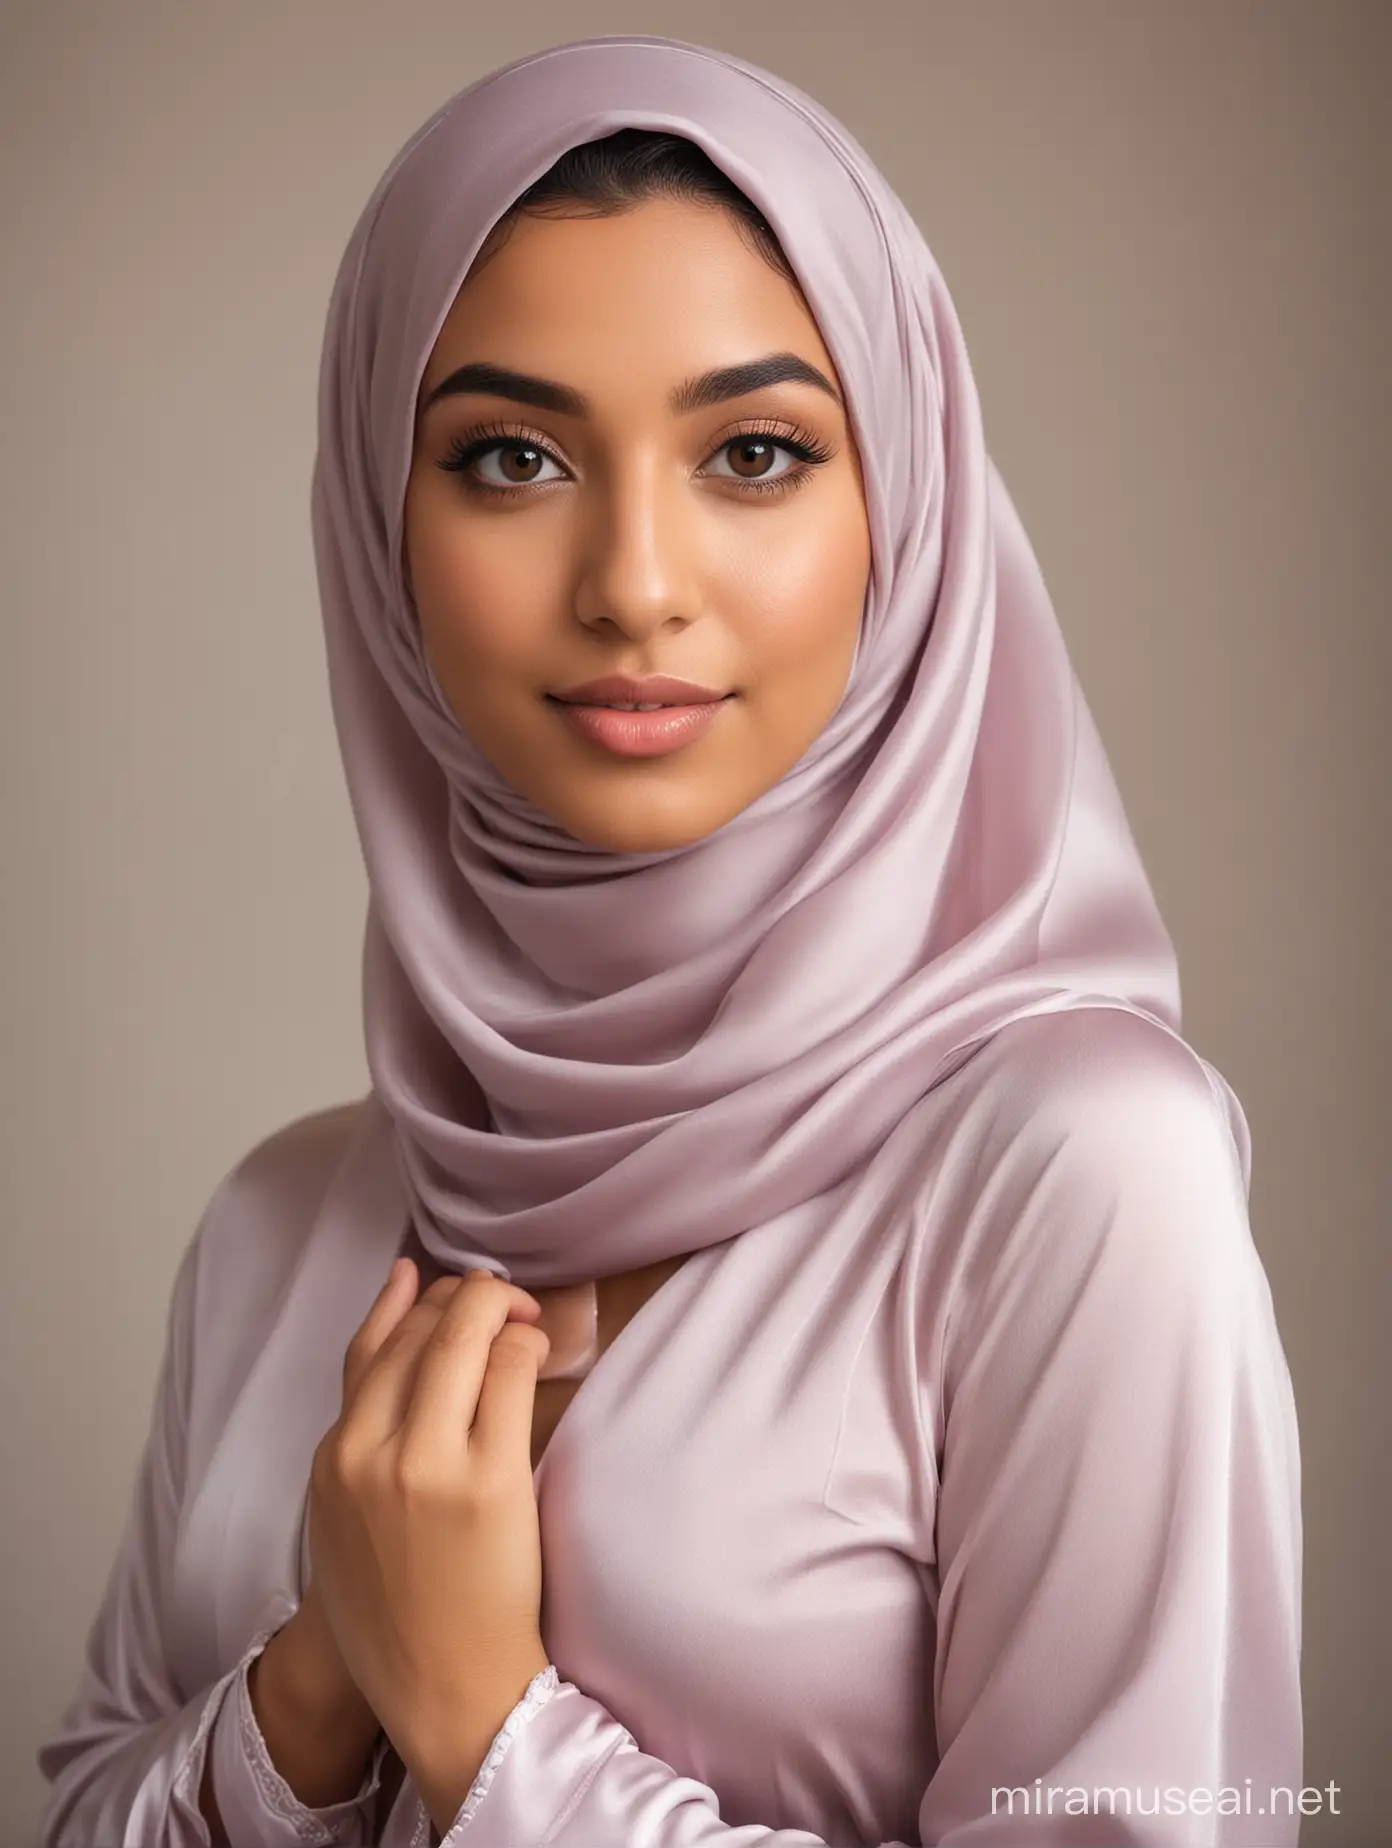 Beautiful young muslim american woman wearing a silk hijab and silk lingerie